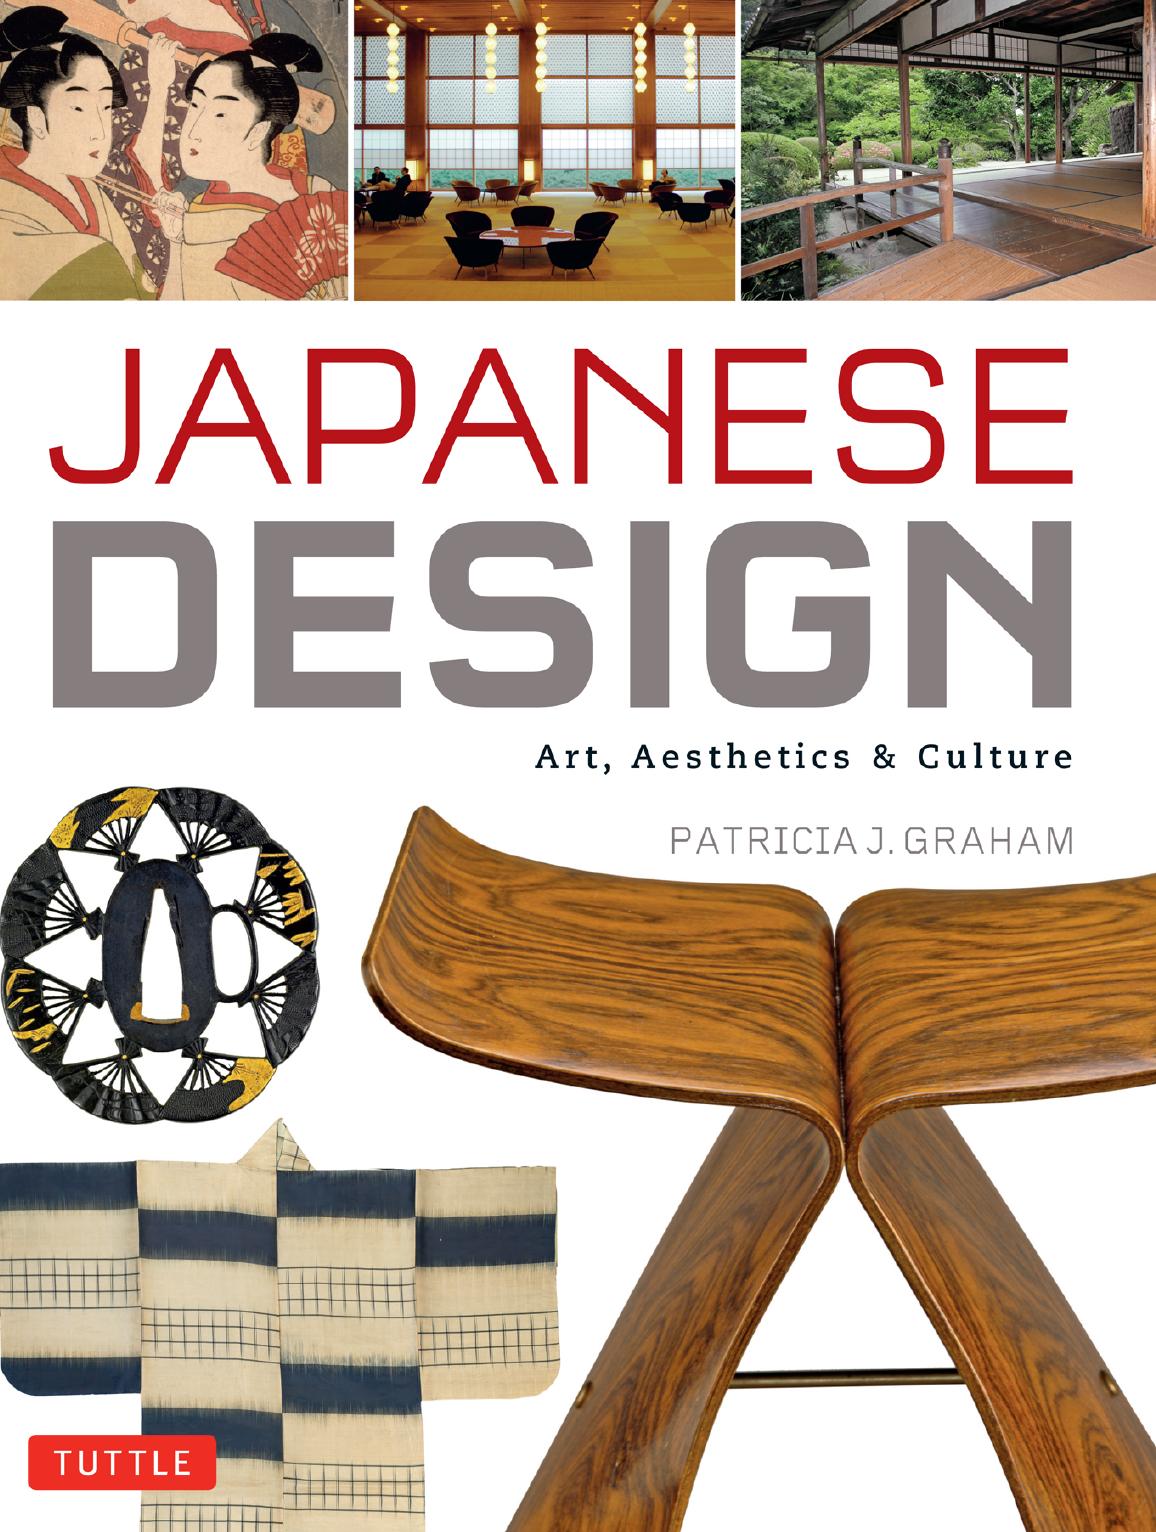 Japanese Design by Patricia J. Graham